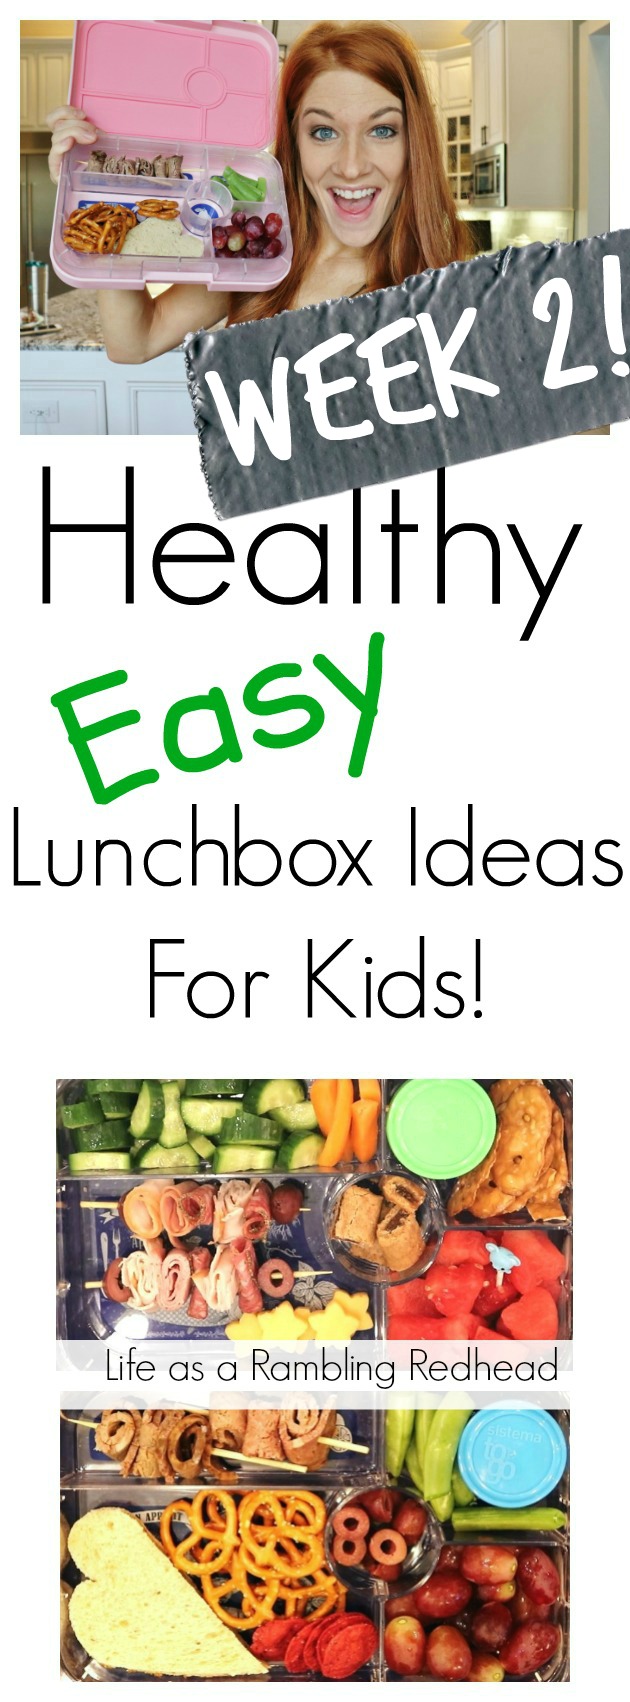 Healthy Easy Lunchbox Ideas For Kids! Week 2! (Life as a Rambling Redhead)